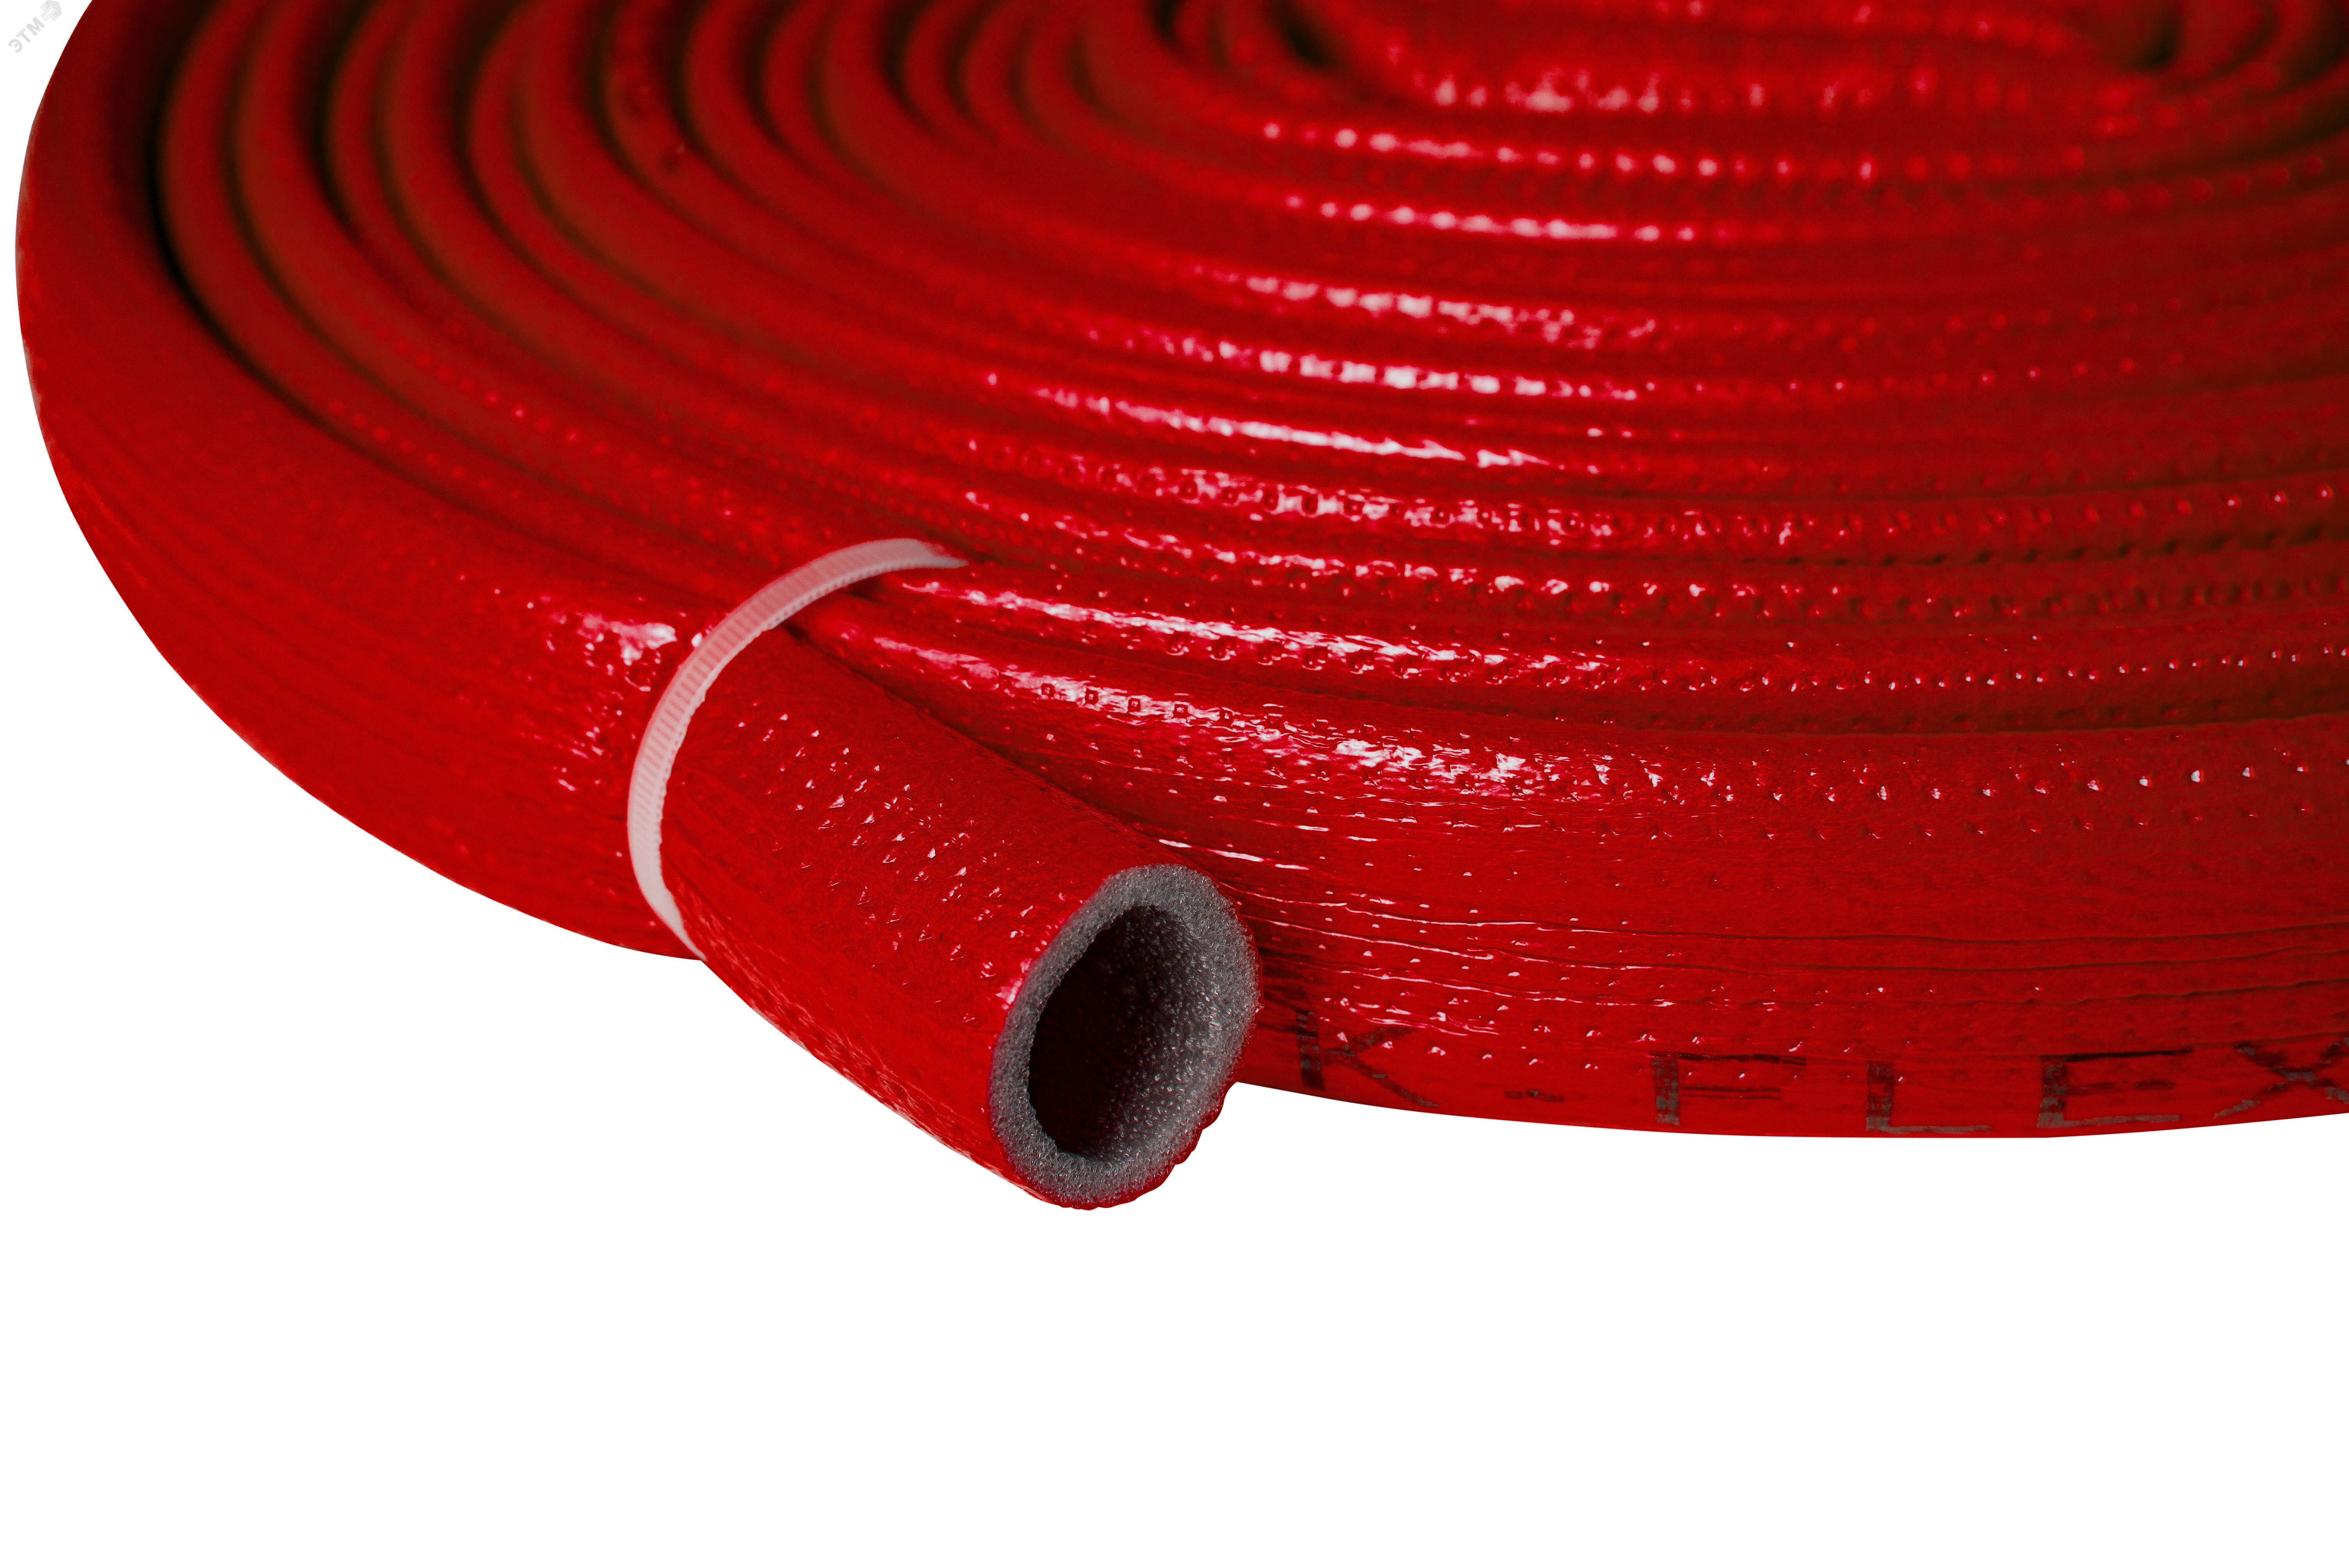 K flex pe compact. Трубка k-Flex pe 04x028-10 Compact Red. Теплоизоляция 18x4 k-Flex pe Compact 10м. Трубка k-Flex pe 20x064-2. Теплоизоляция k-Flex, 18 (4мм) бухта 10м красный, шт.